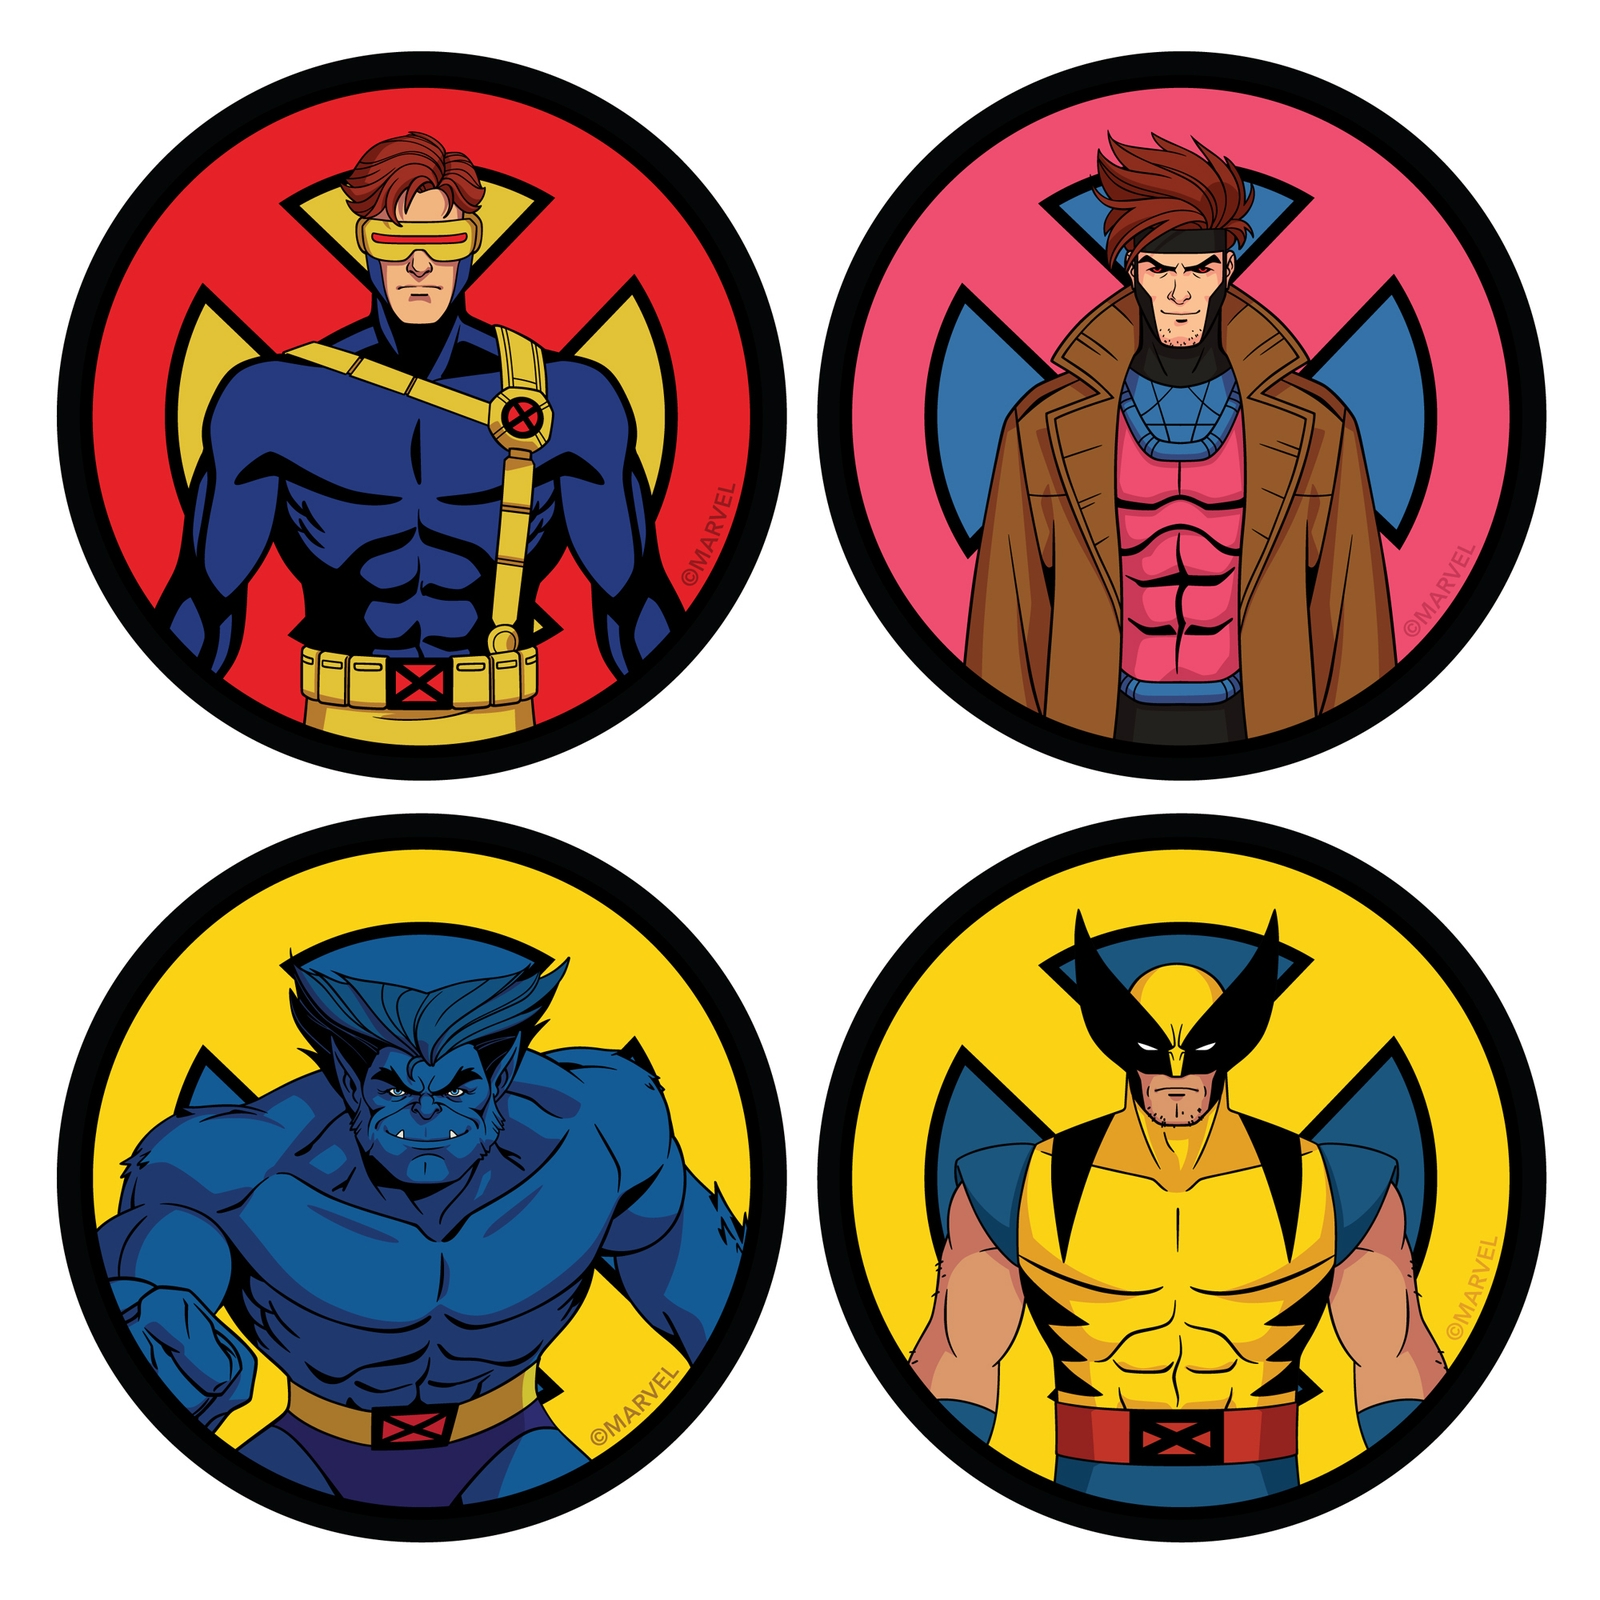 X-Men %2797 Heroes Round Coaster Set